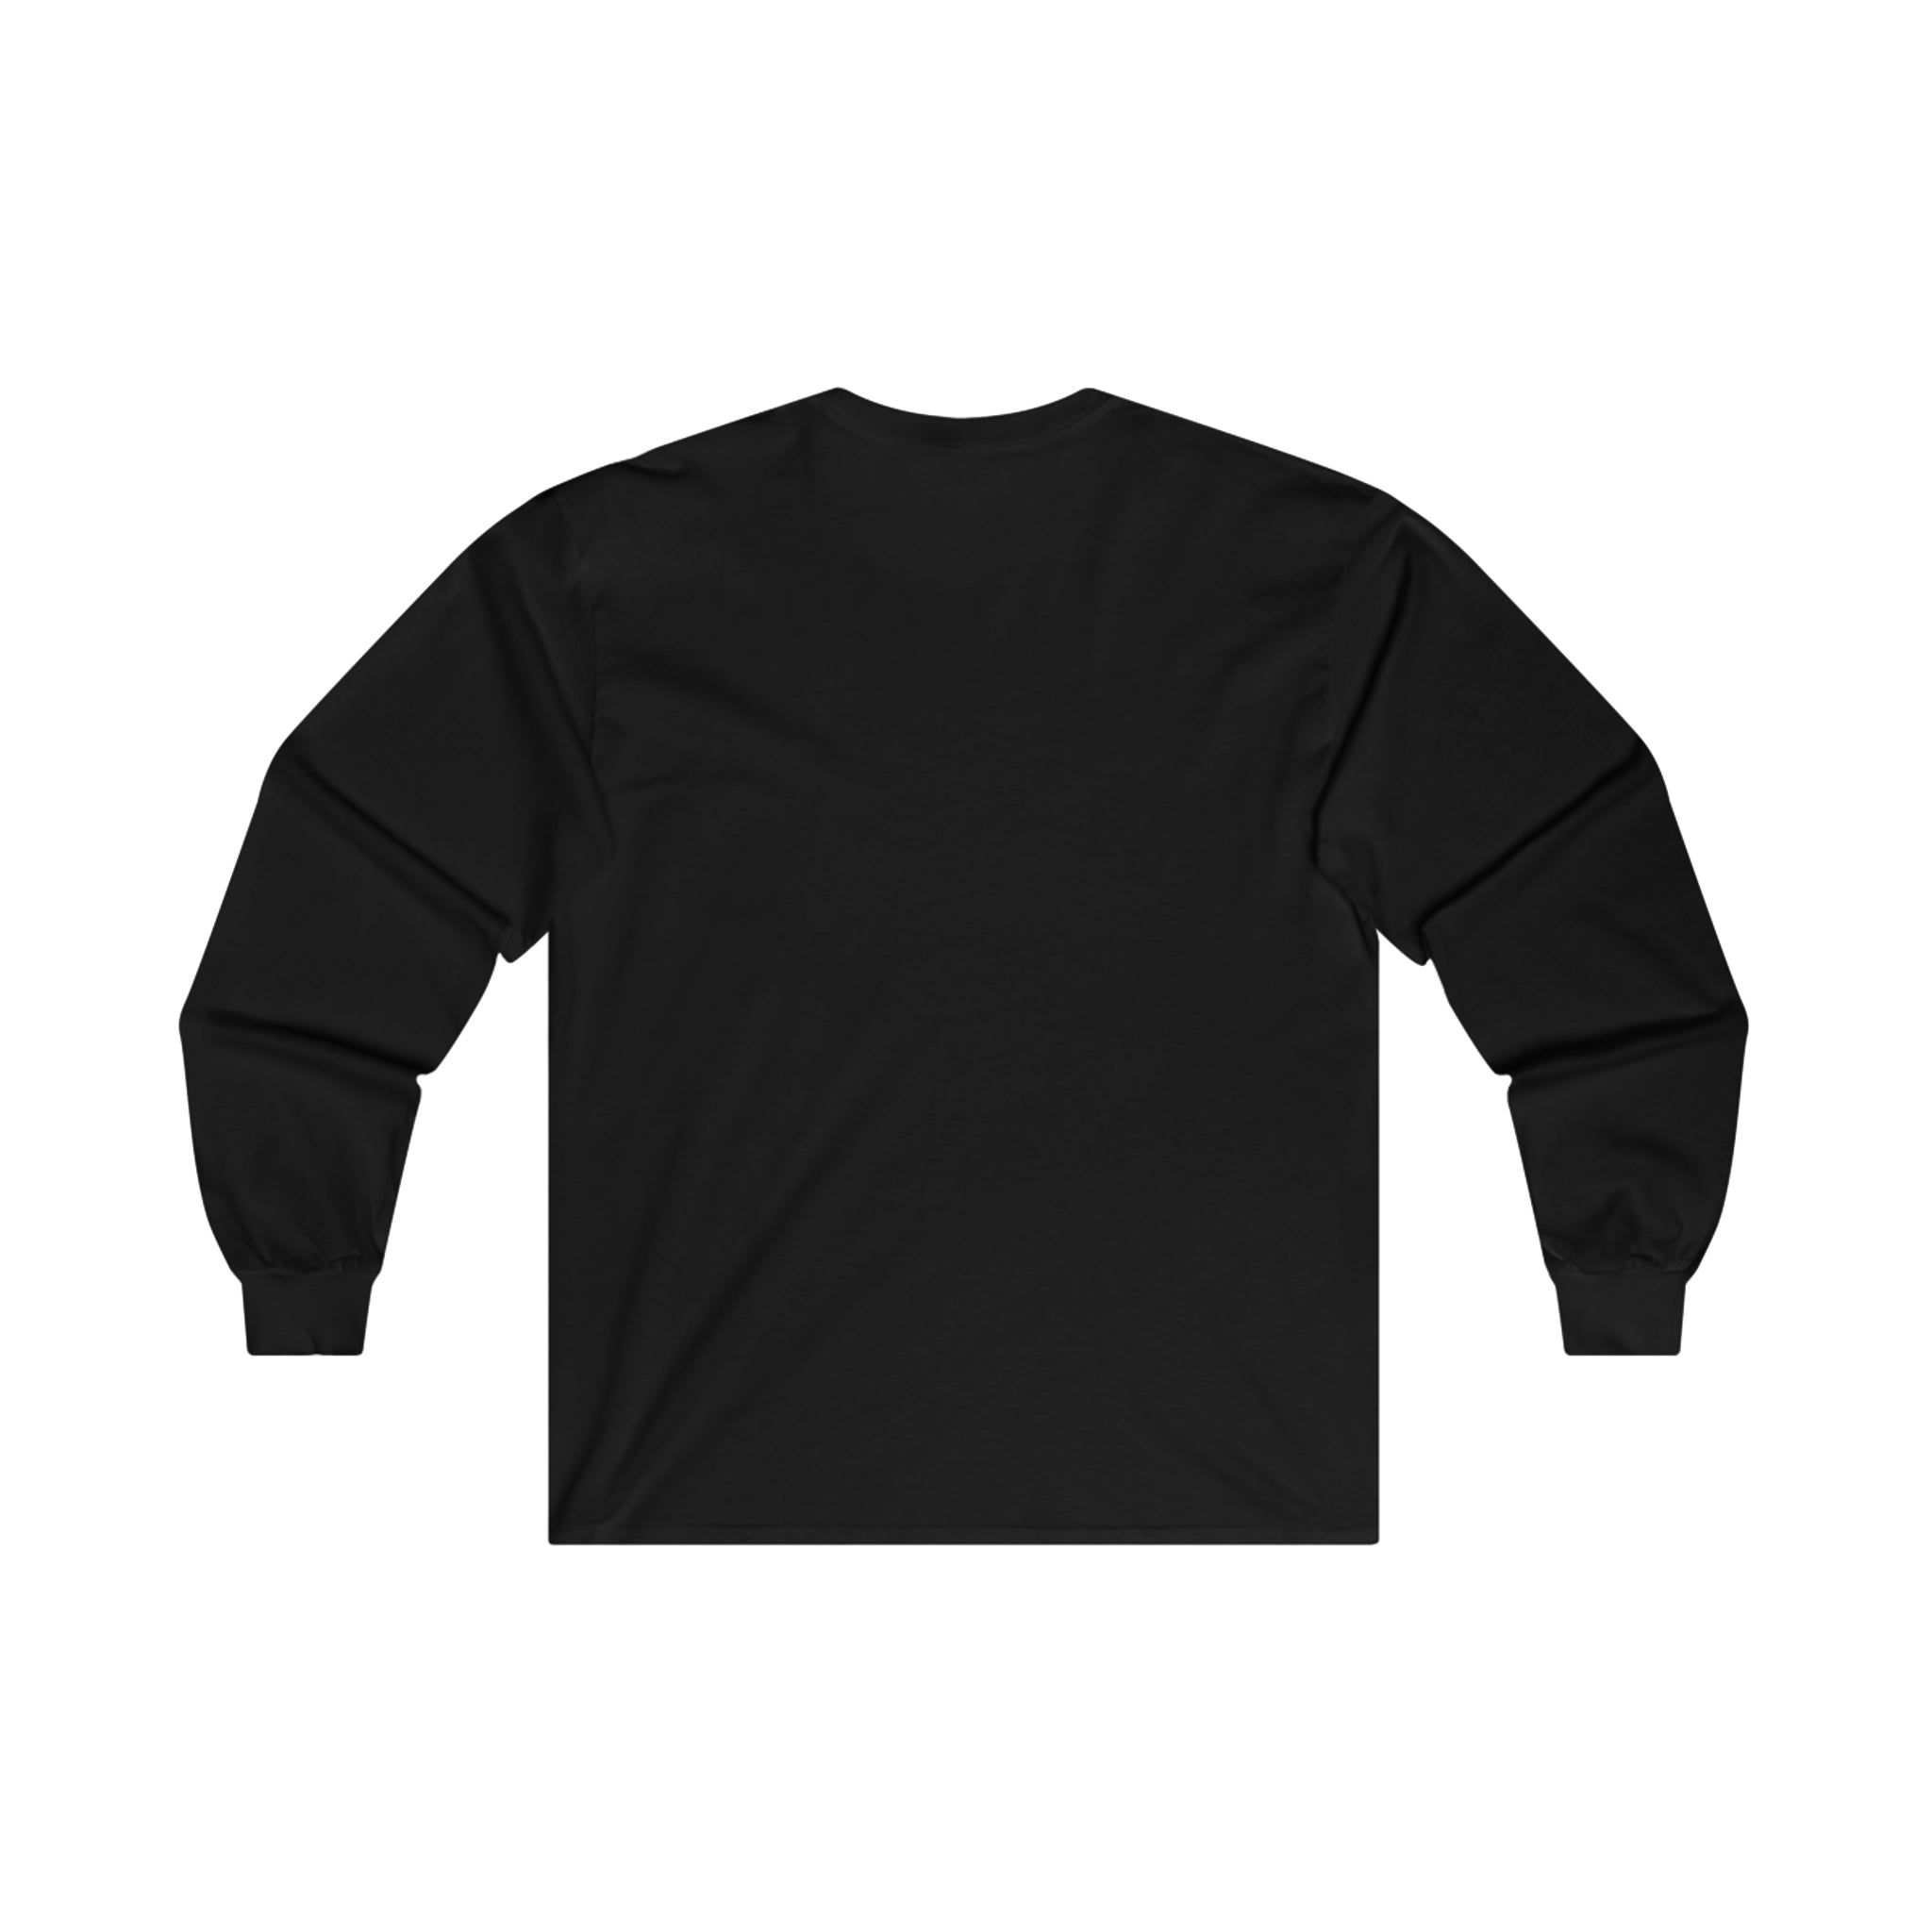 ROUGH DRESS Pima Cotton Blend Crew Neck Long Sleeves Black T-shirt